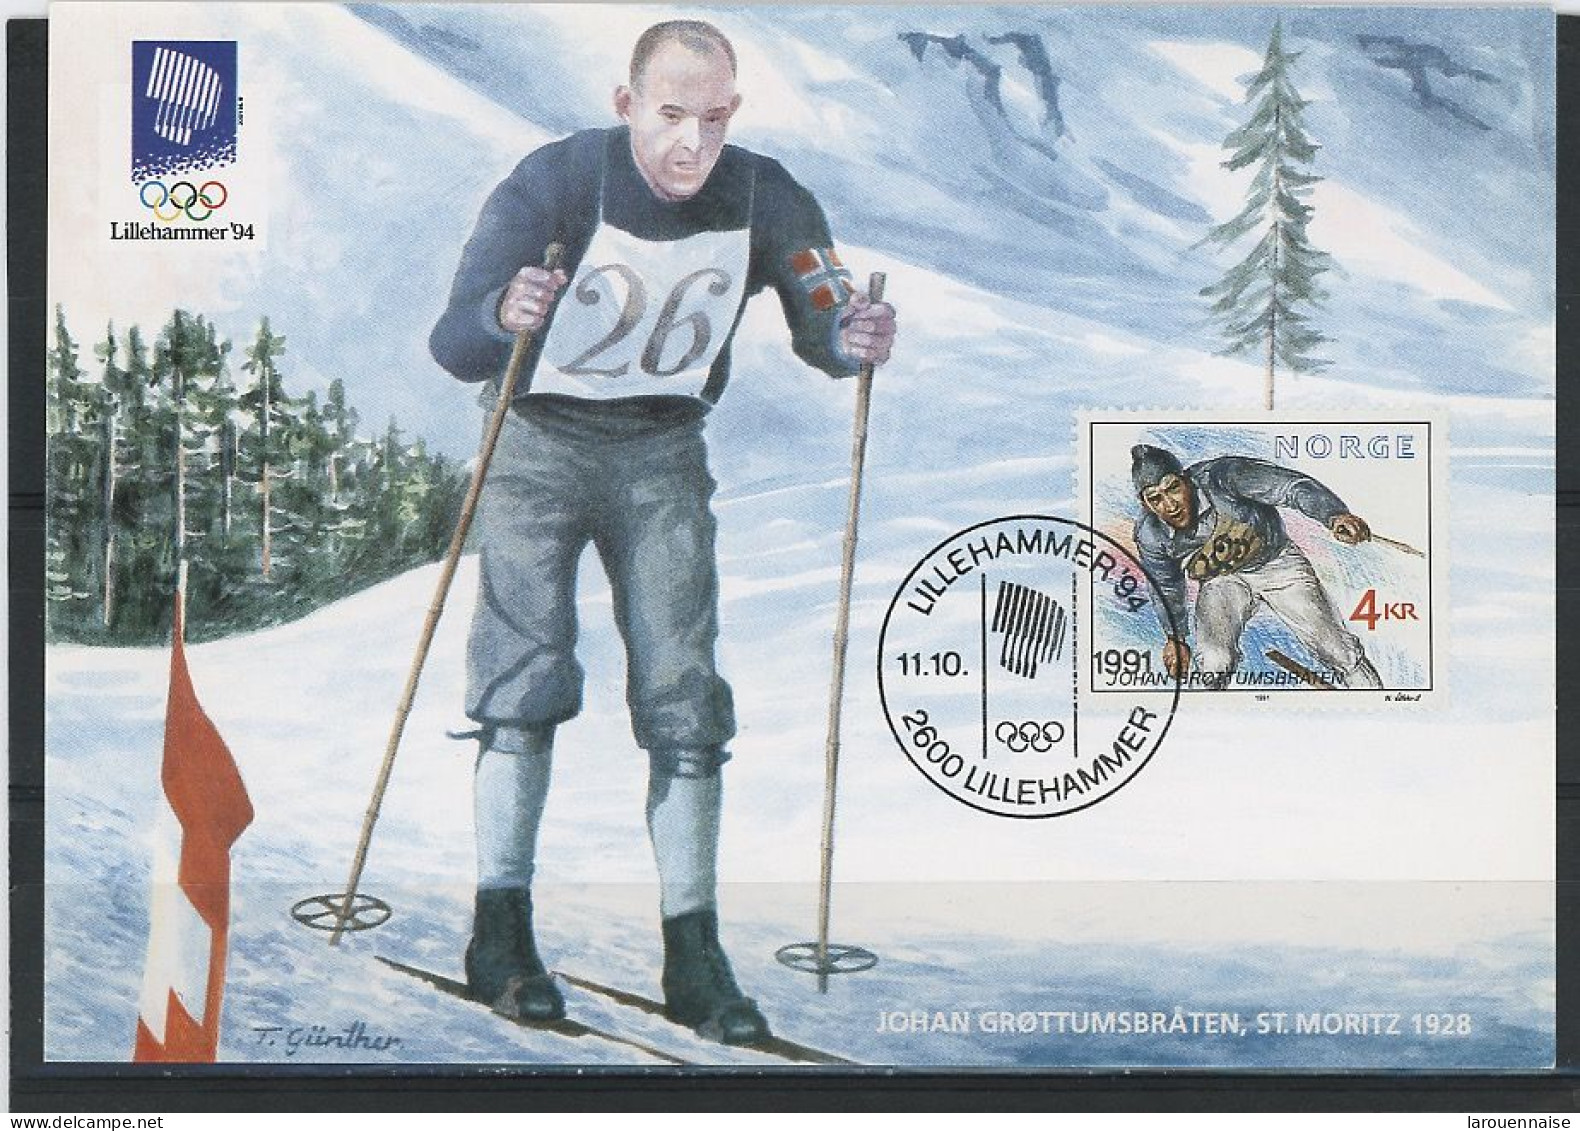 JEUX OLYMPIQUES - COMBINÉ NORDIC - JOHAN GROTTUMSBRATEN -ST MORITZ 1928 - Olympische Spiele